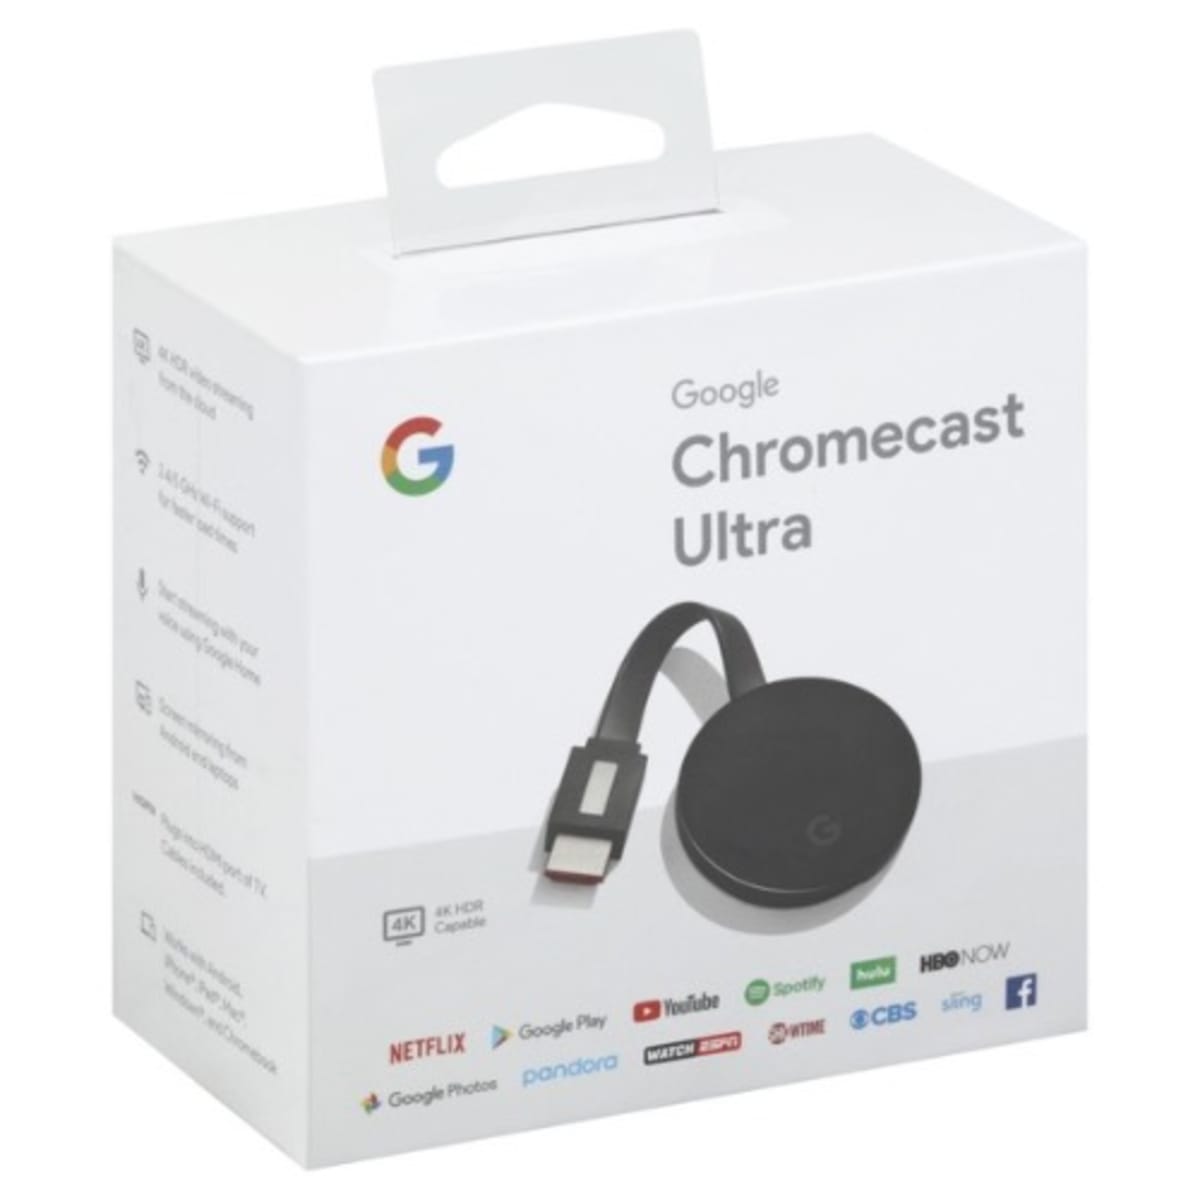 Google Chromecast Ultra 4k HDR Capable Premium TV Streaming Device